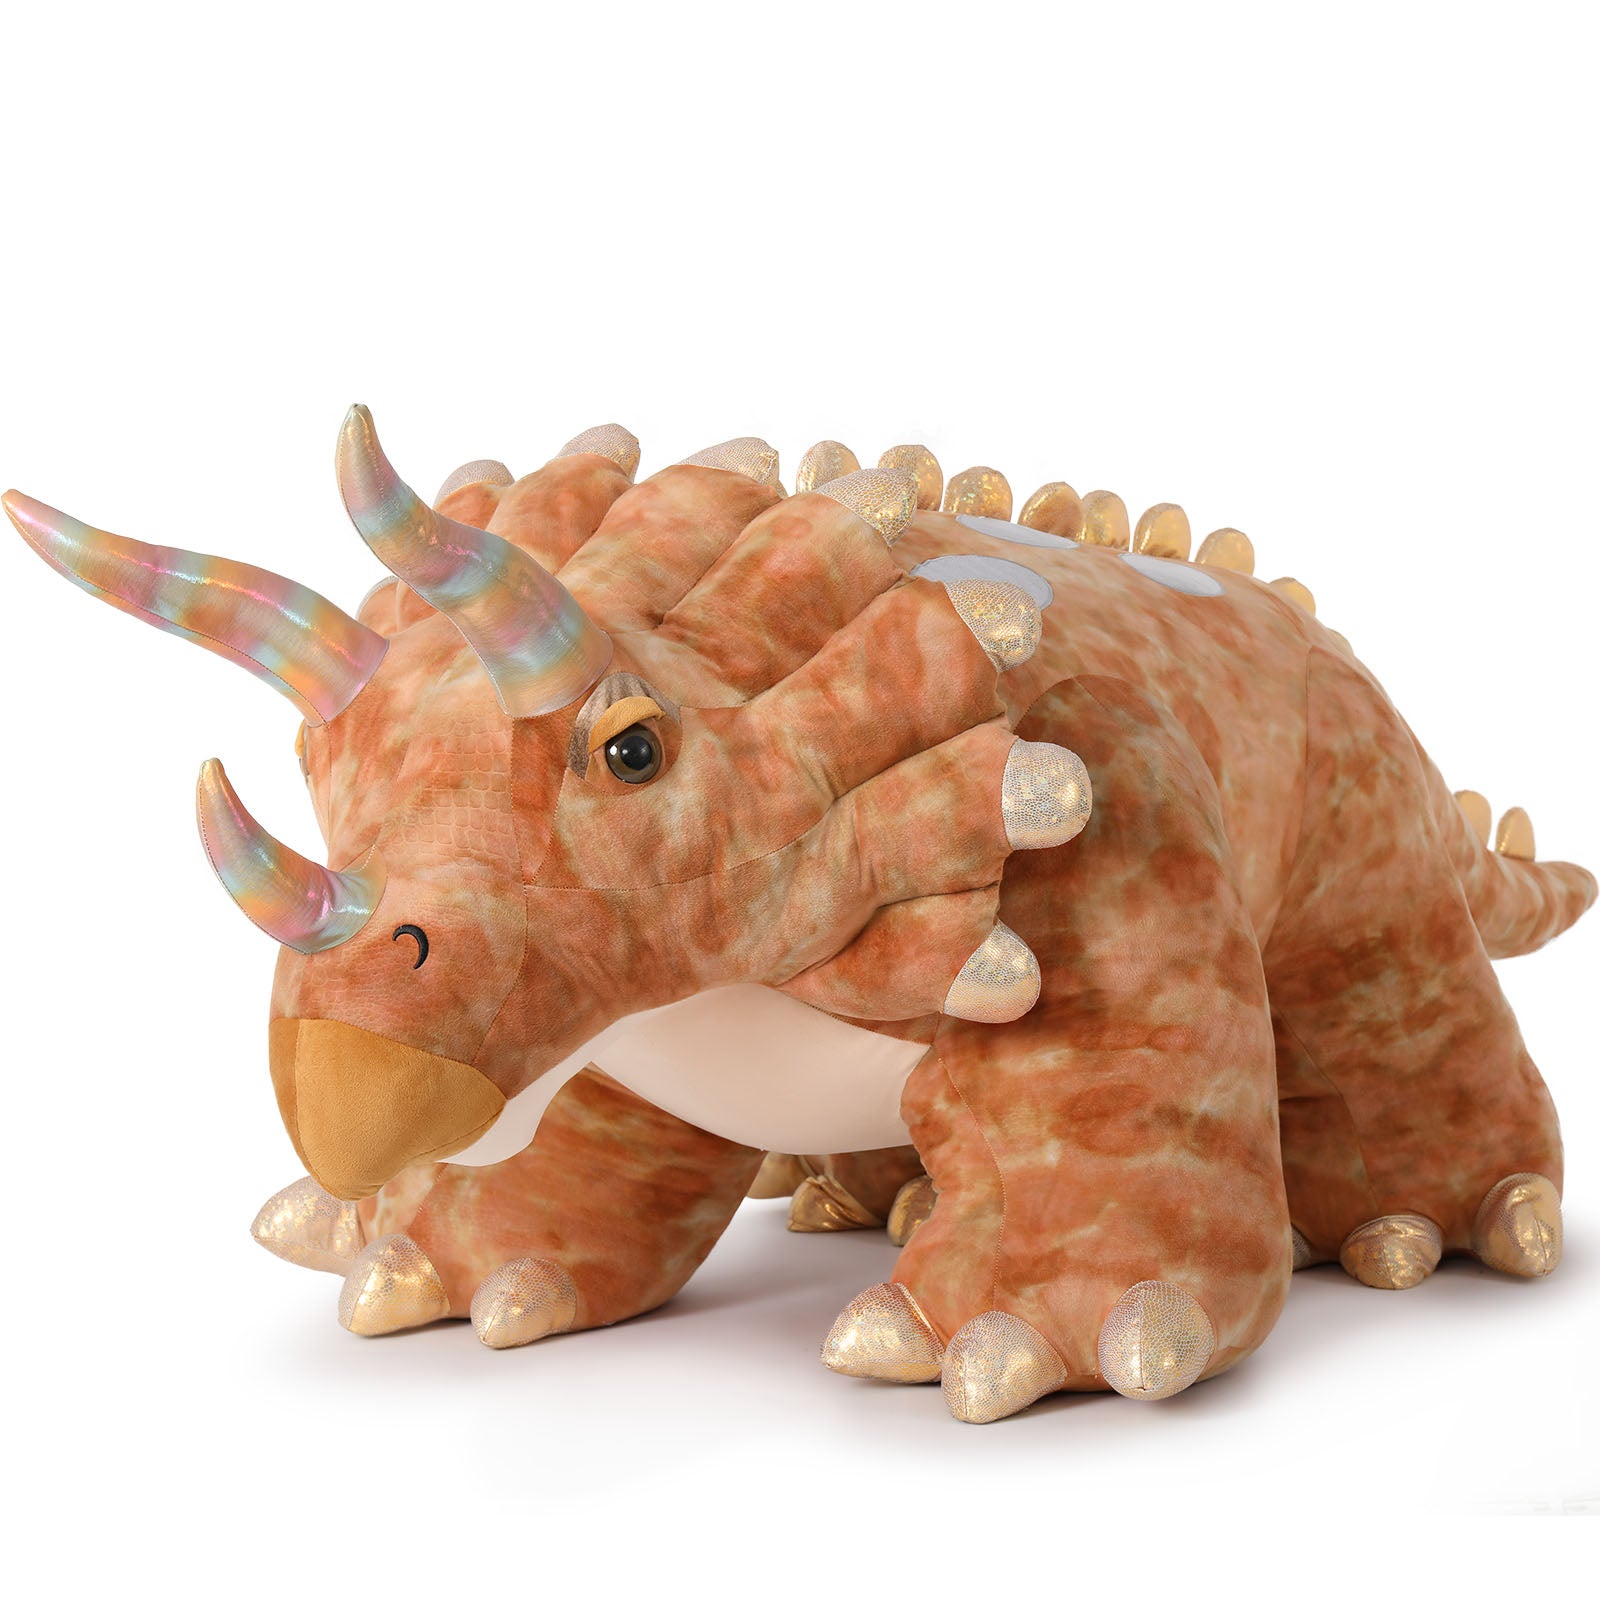 Huge Triceratops Plush Toy Dino Stuffed Animals, 6.4 FT